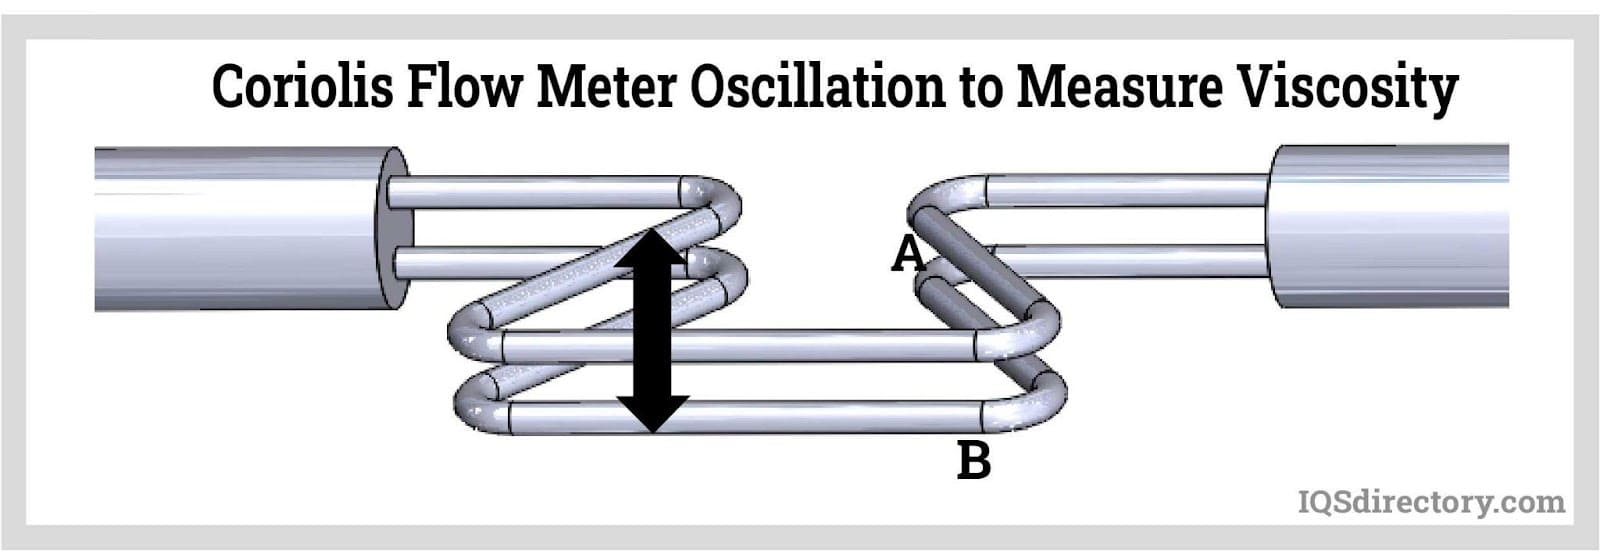 Coriolis Flow Meter Osciliation to Measure Viscosity